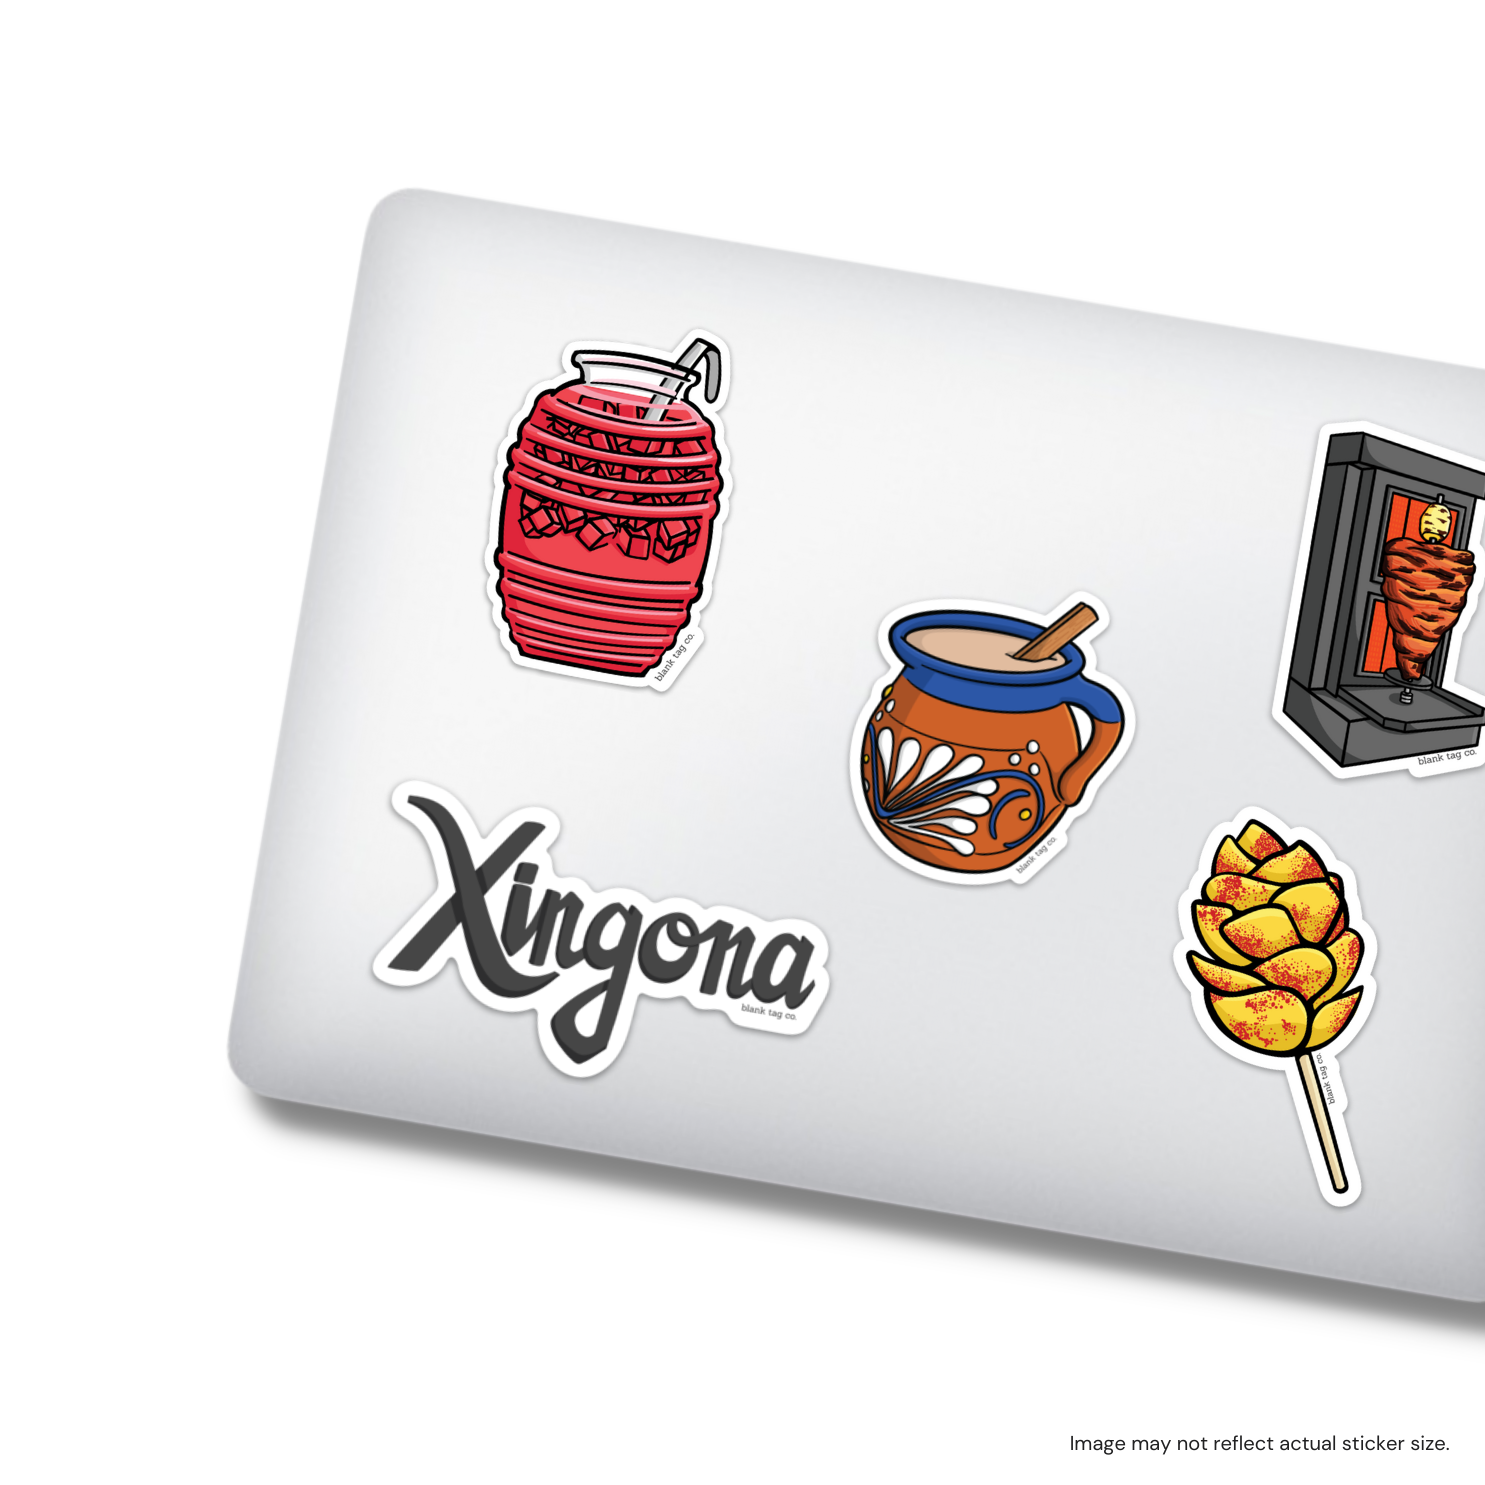 The Xingona Sticker